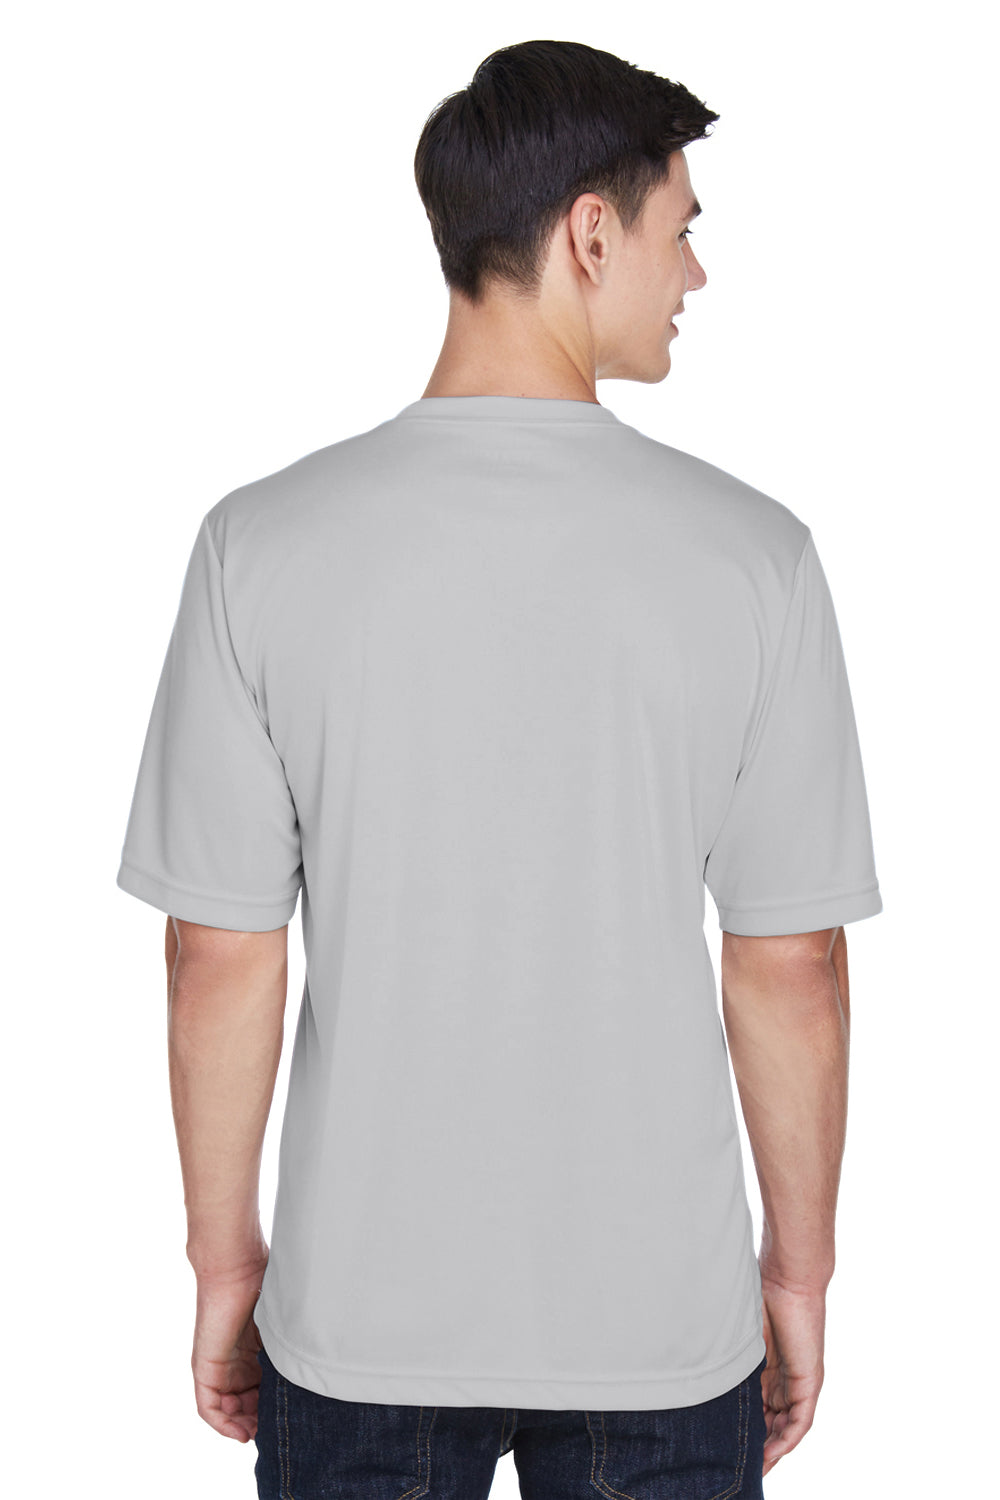 Team 365 TT11 Mens Zone Performance Moisture Wicking Short Sleeve Crewneck T-Shirt Silver Grey Back